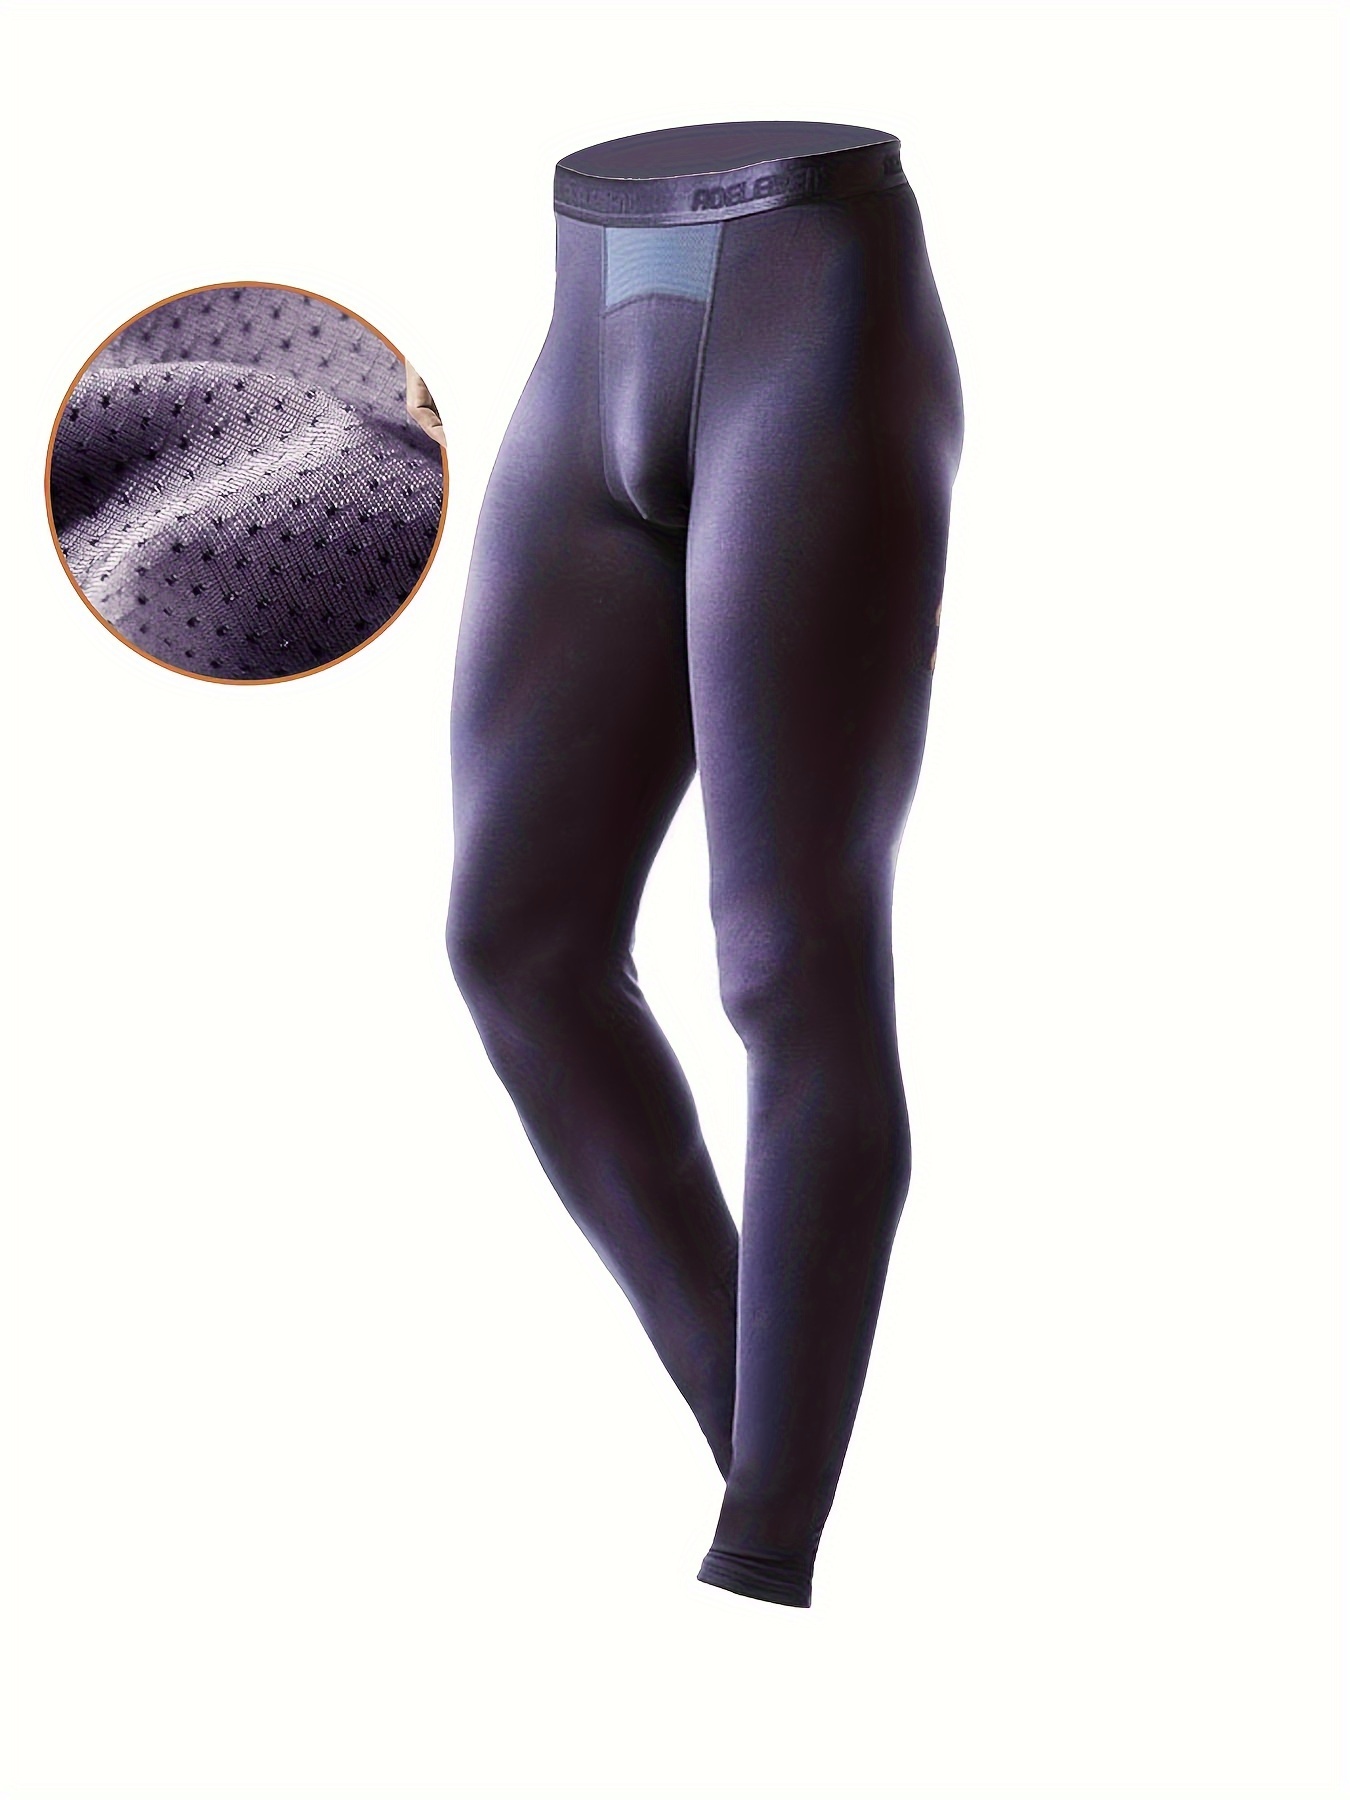 Ouruikia Men's Thermal Underwear Set Thermal Pants & Thermal